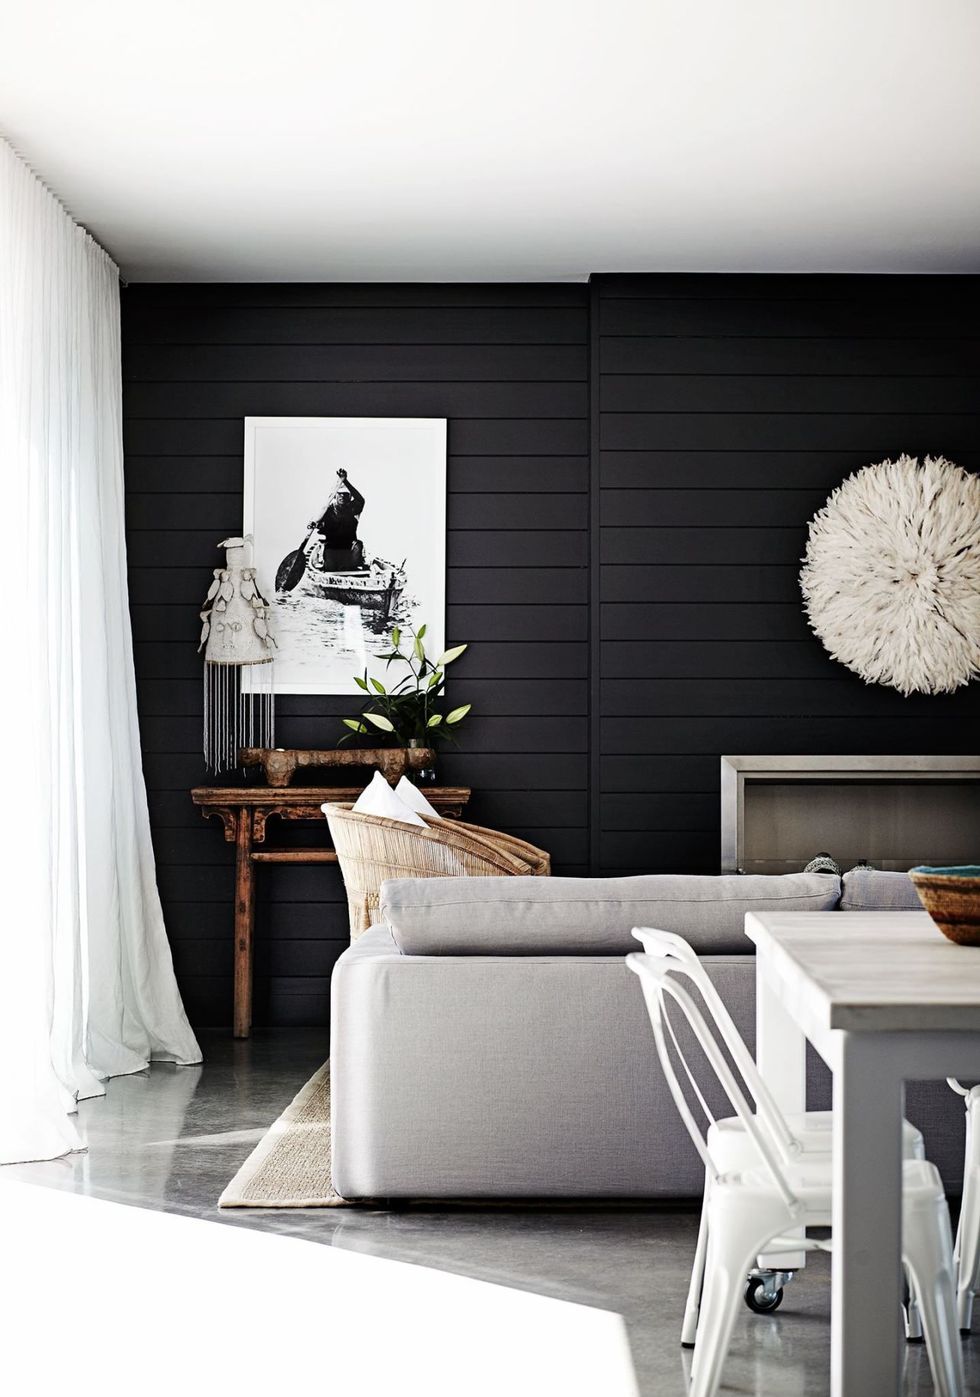 20 Beautiful Black Shiplap Wall Ideas; here are stunning black shiplap accent wall inspiration!